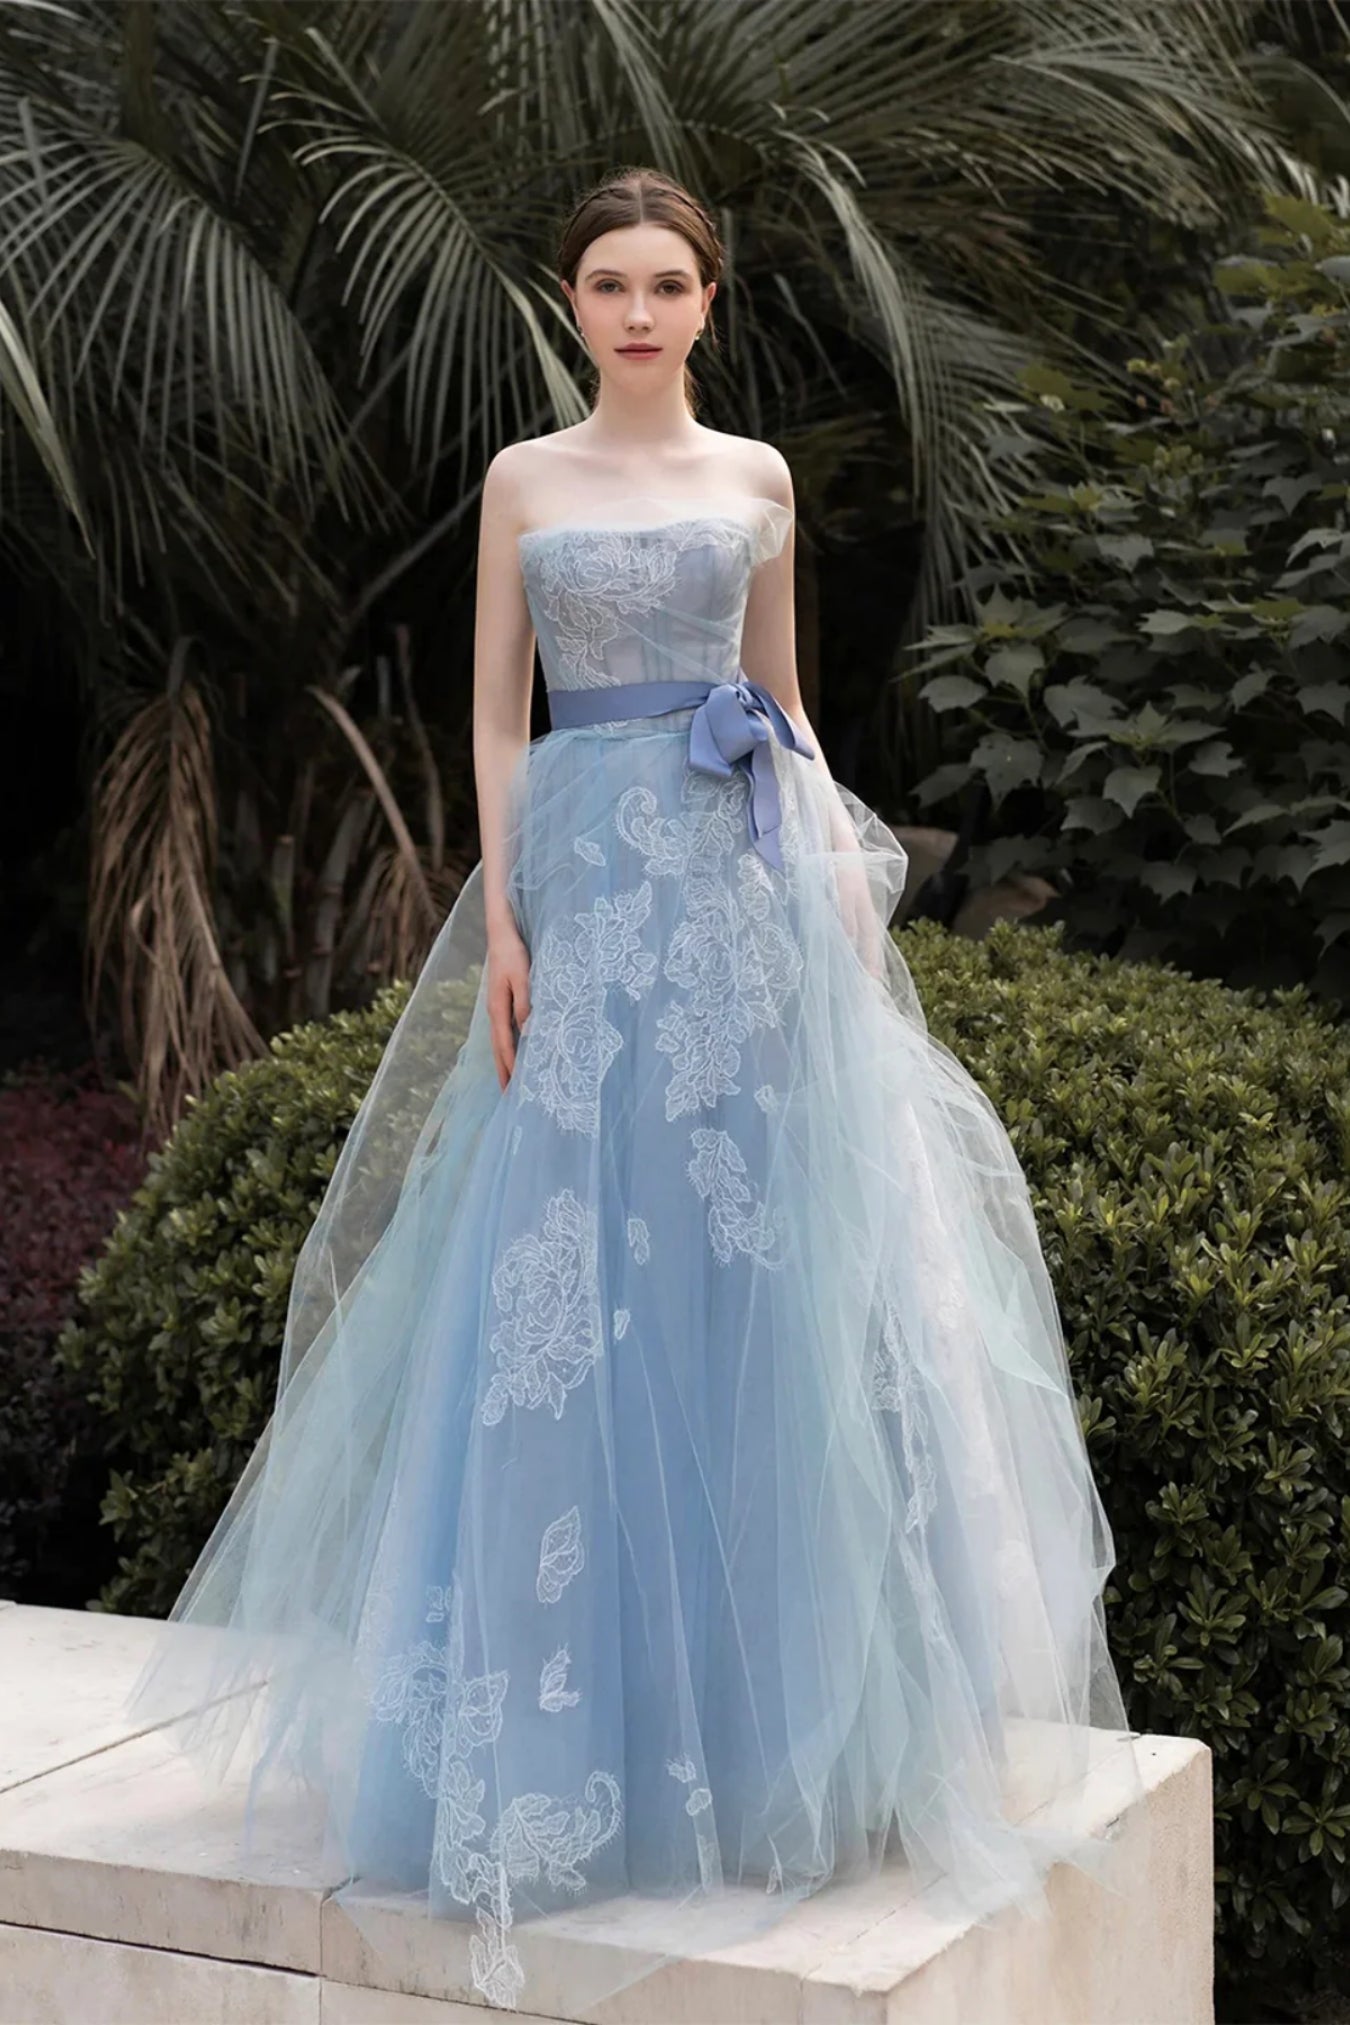 Blue Lace Strapless A Line Long Prom Dresses, Blue Lace Formal Dresses, Long Blue Evening Dresses WT1325